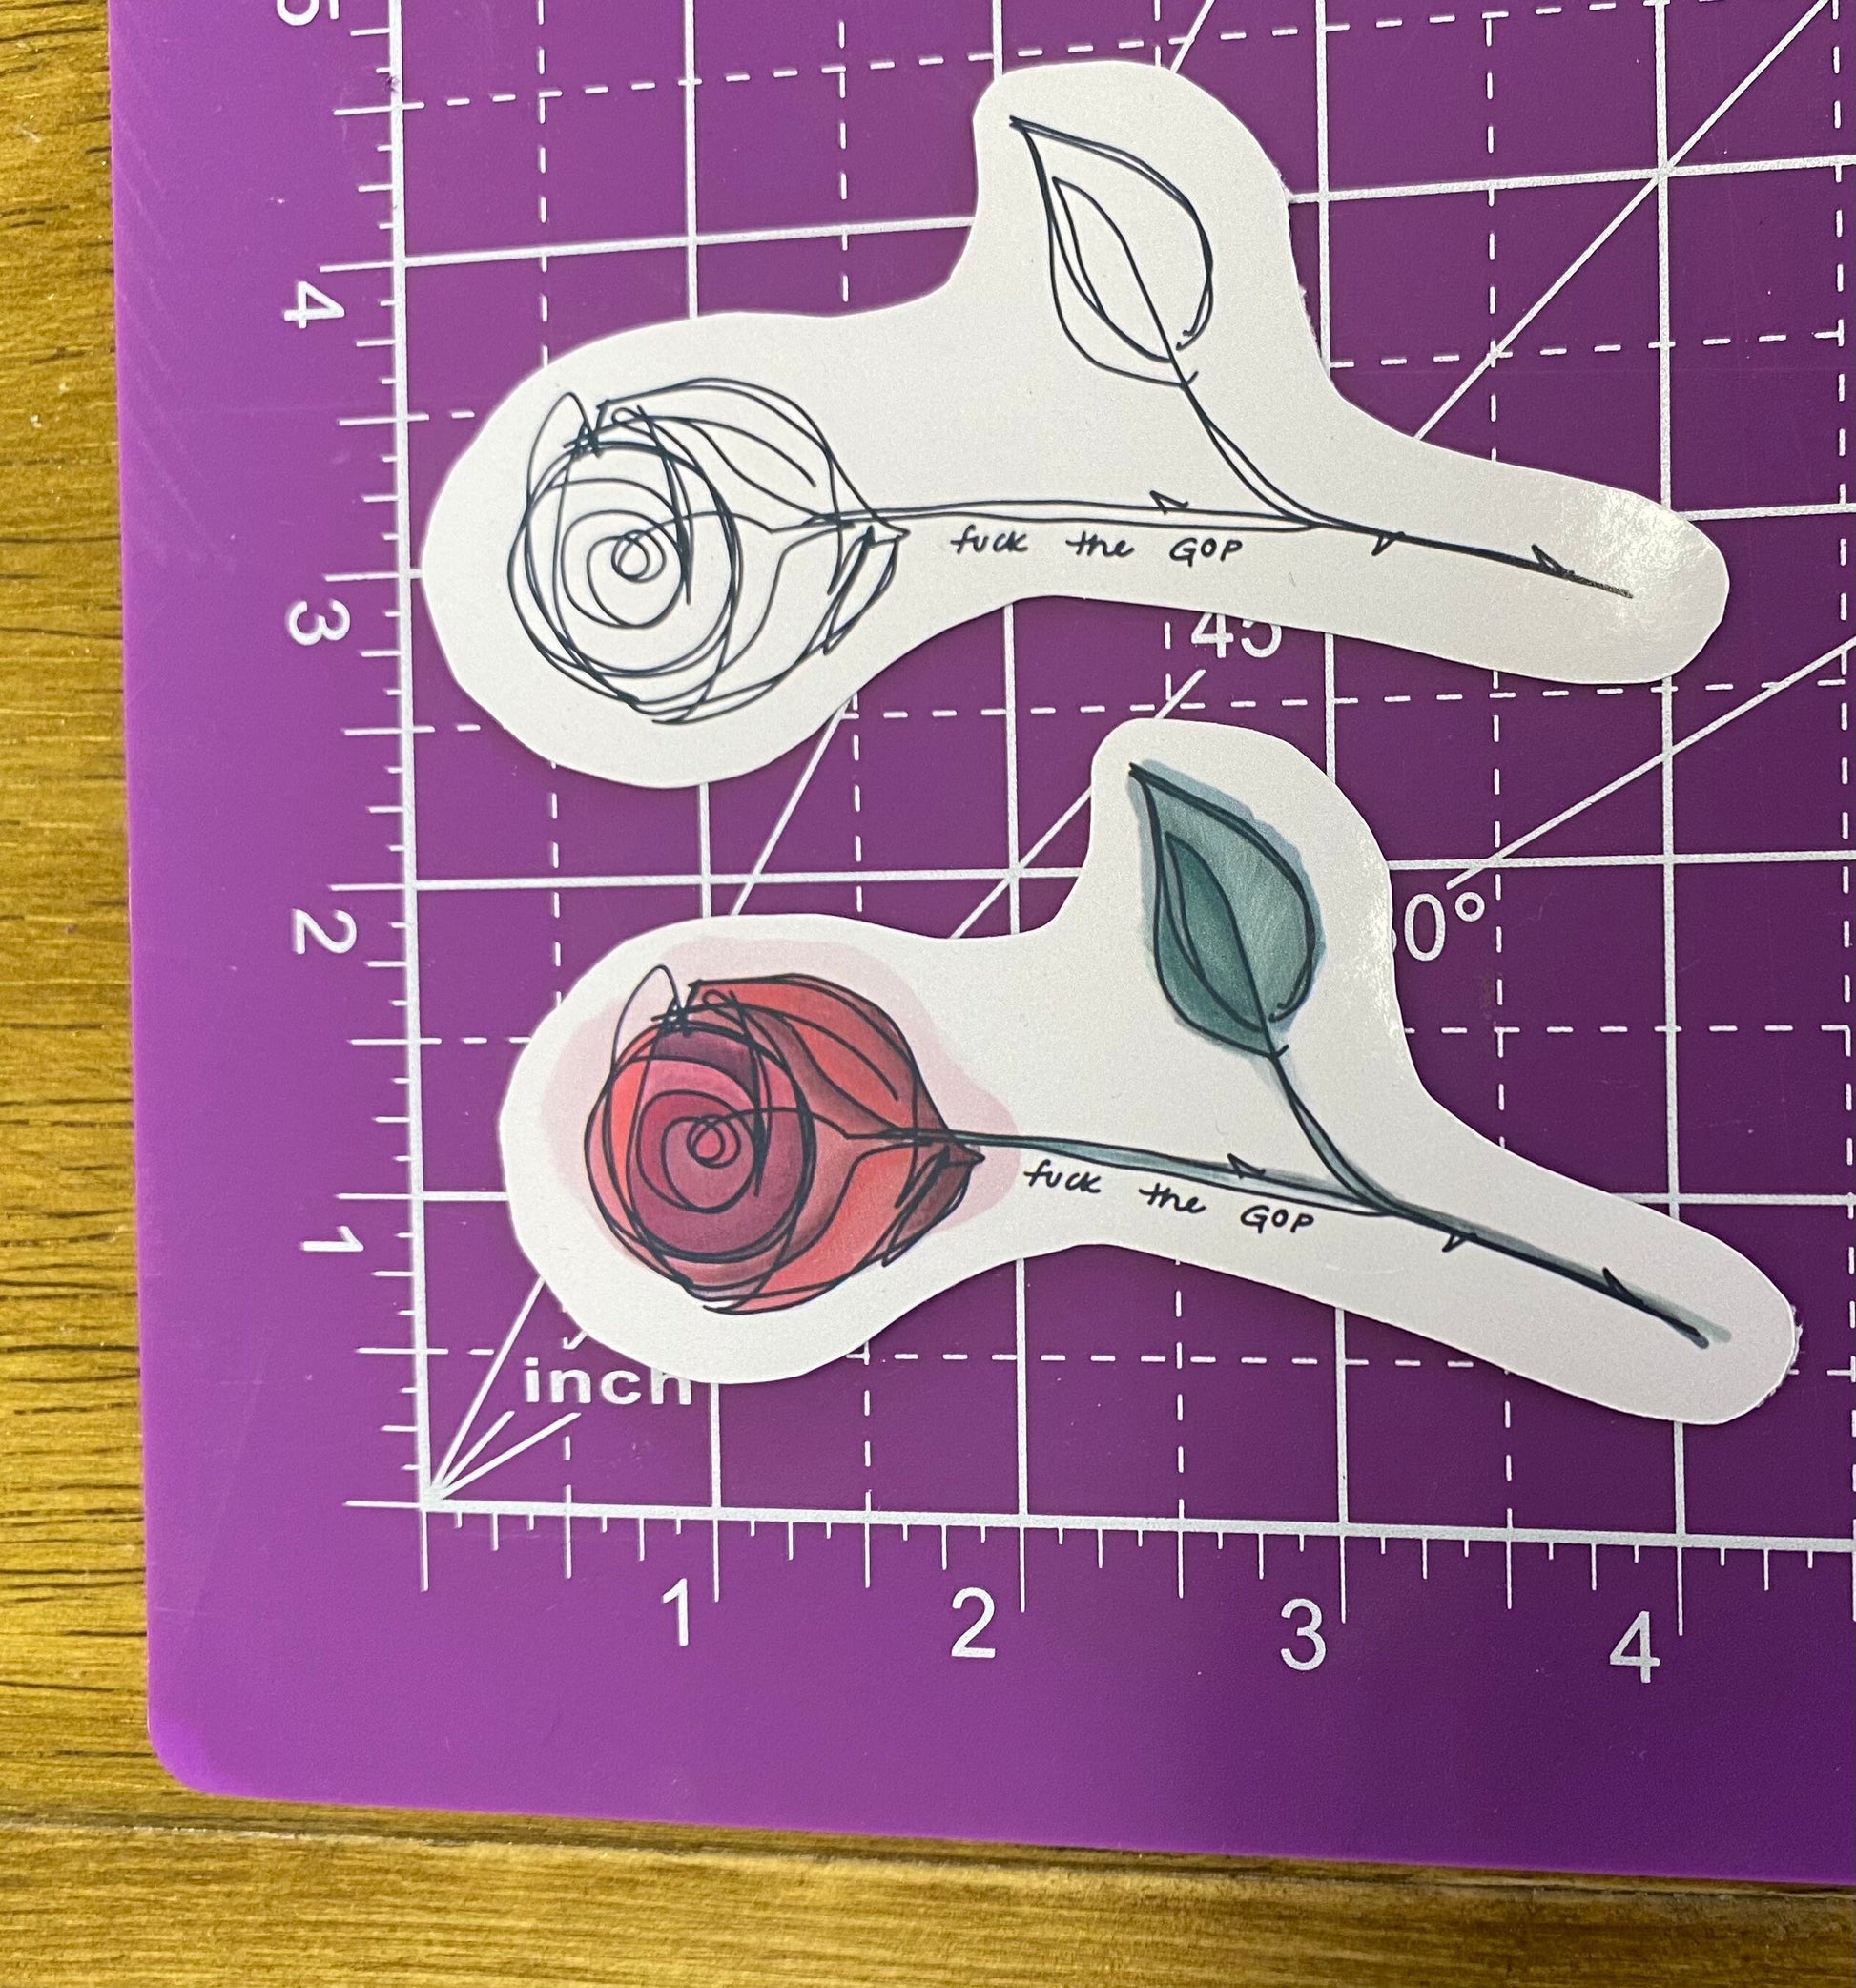 Fuck the GOP Rose Sticker